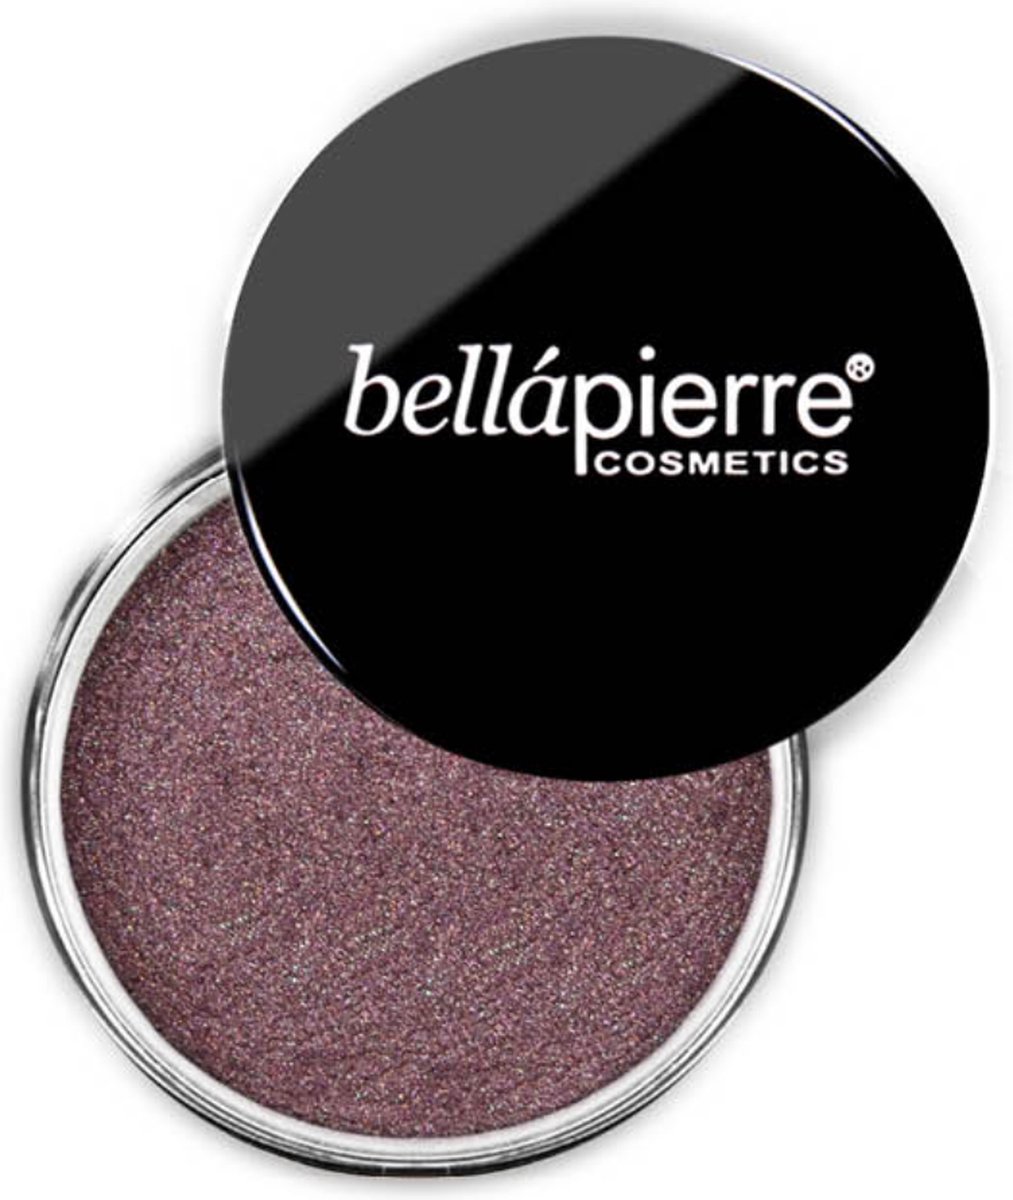 BellaPierre - Shimmer Powder - Eyeshadow - Oogschaduw - Make up - Antiqa